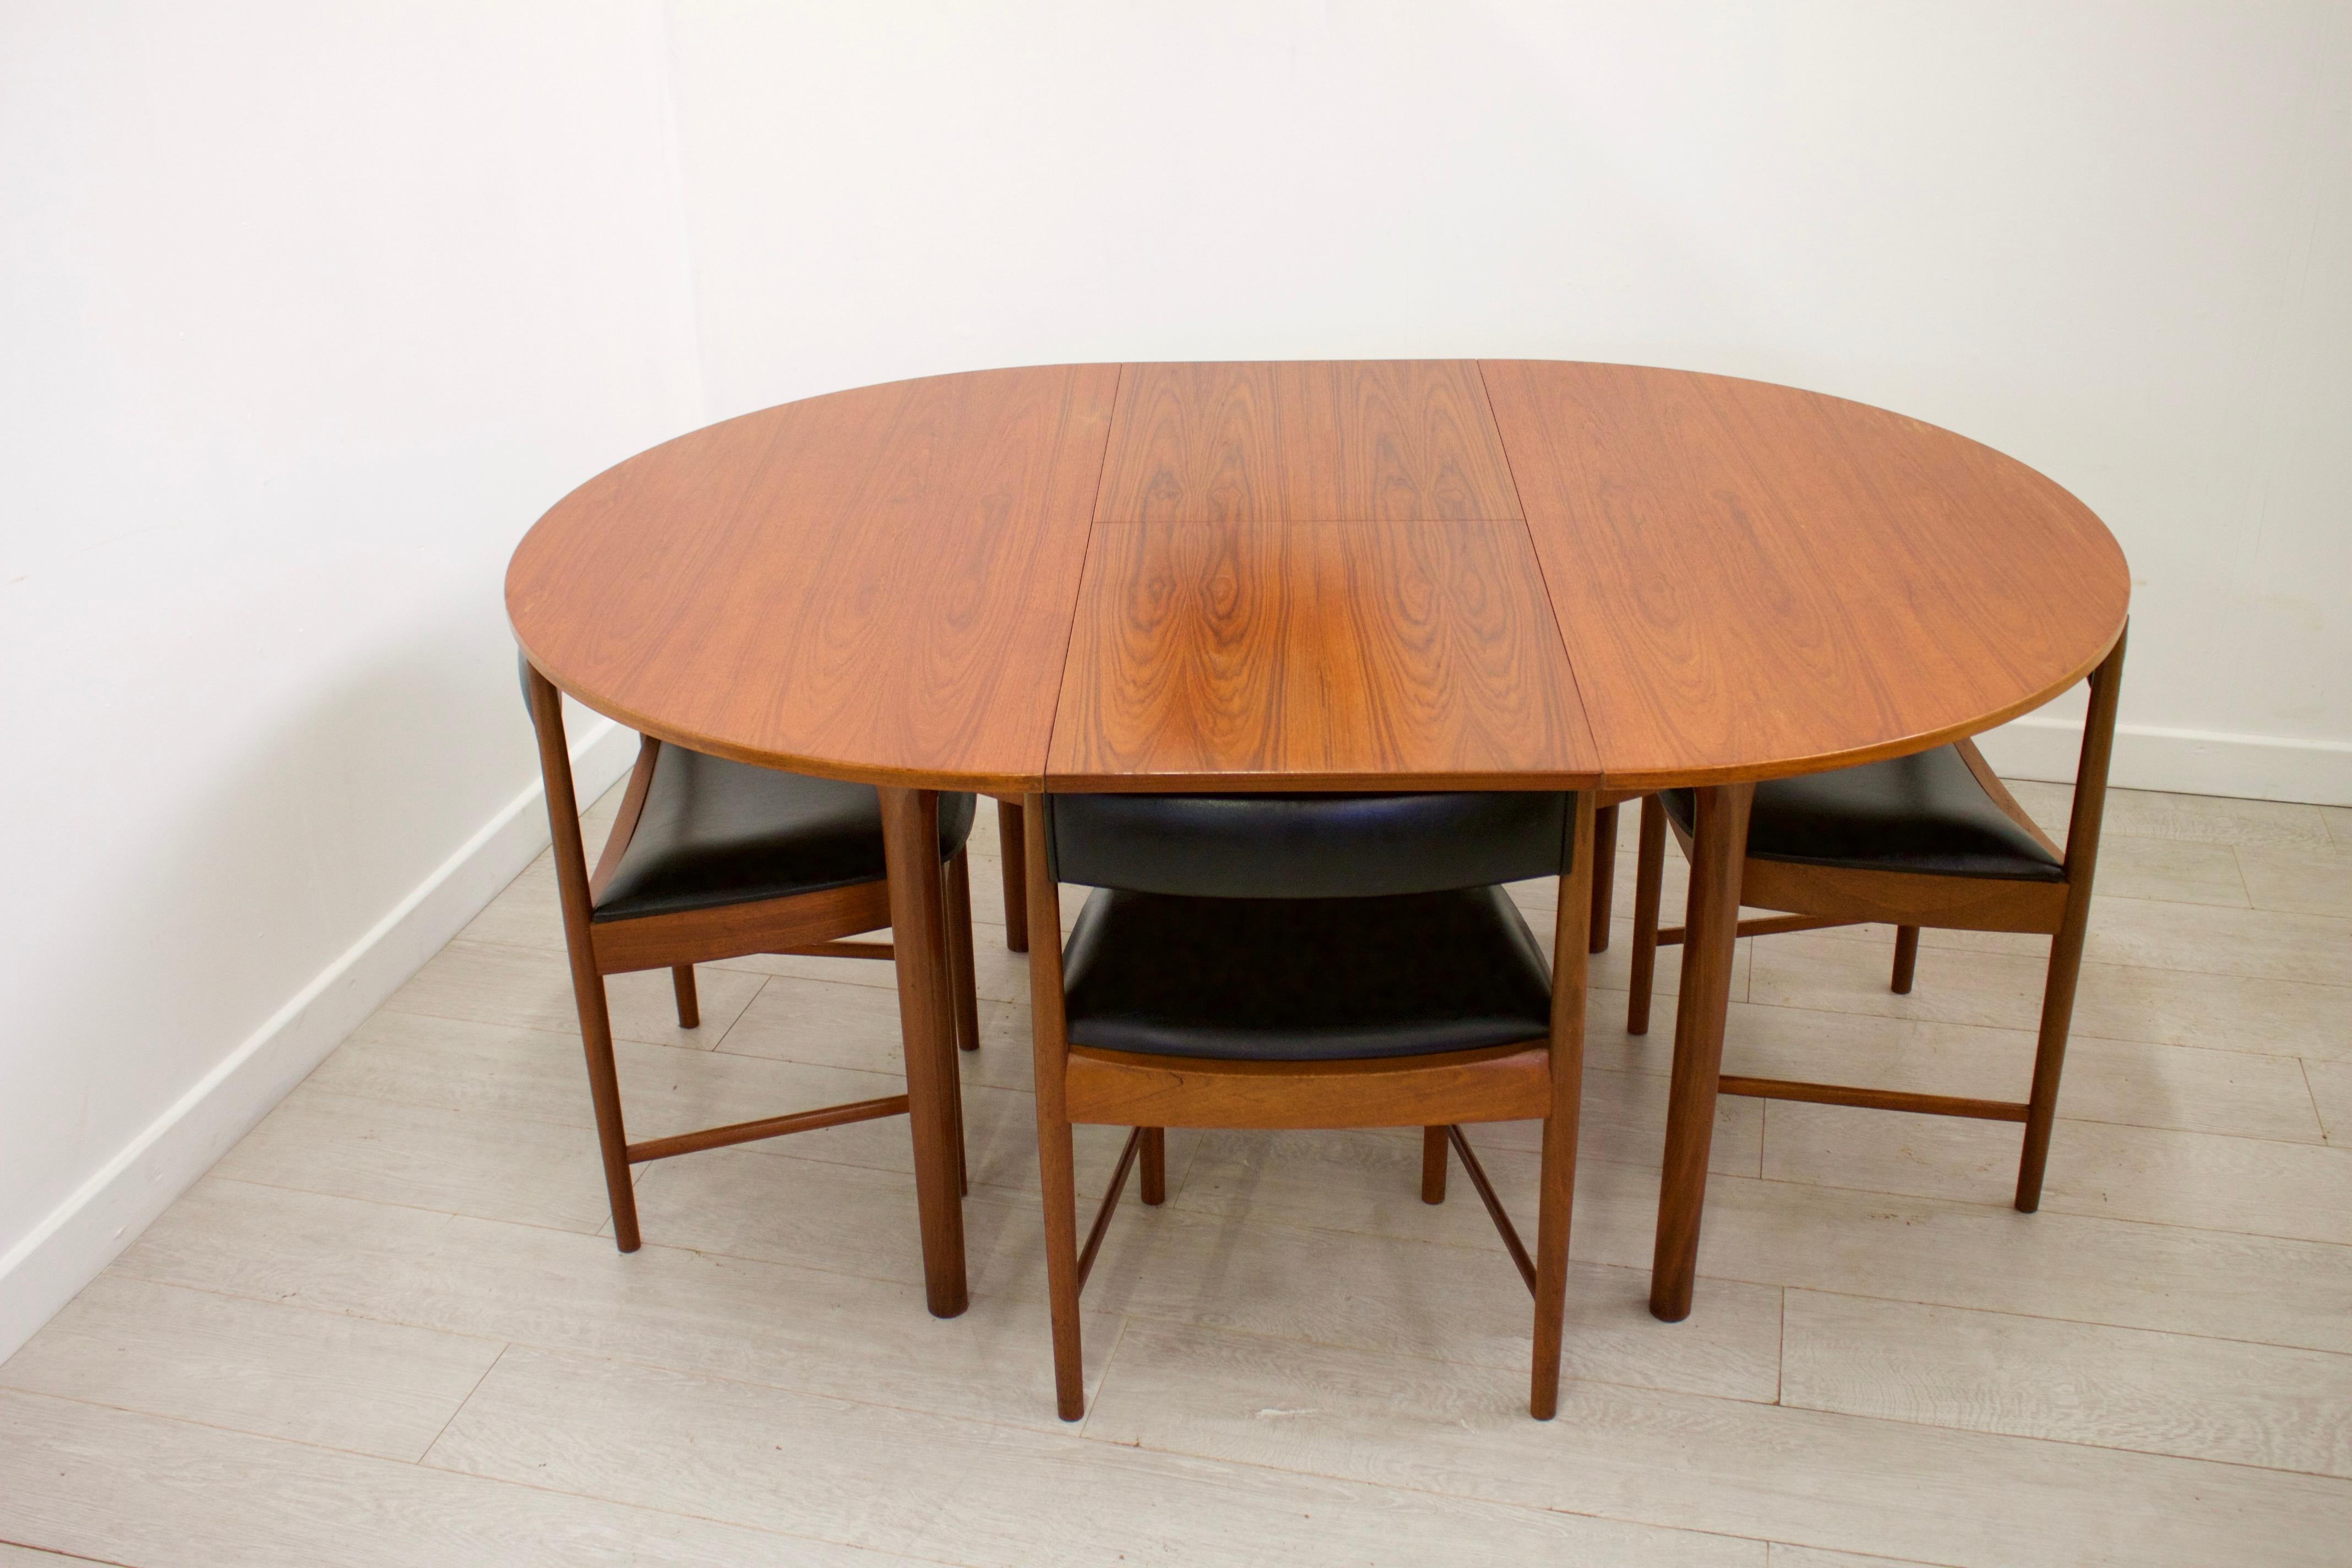 Midcentury design
- Midcentury extending dining table
- Made from teak and teak veneer
- Extended width 167 cm.